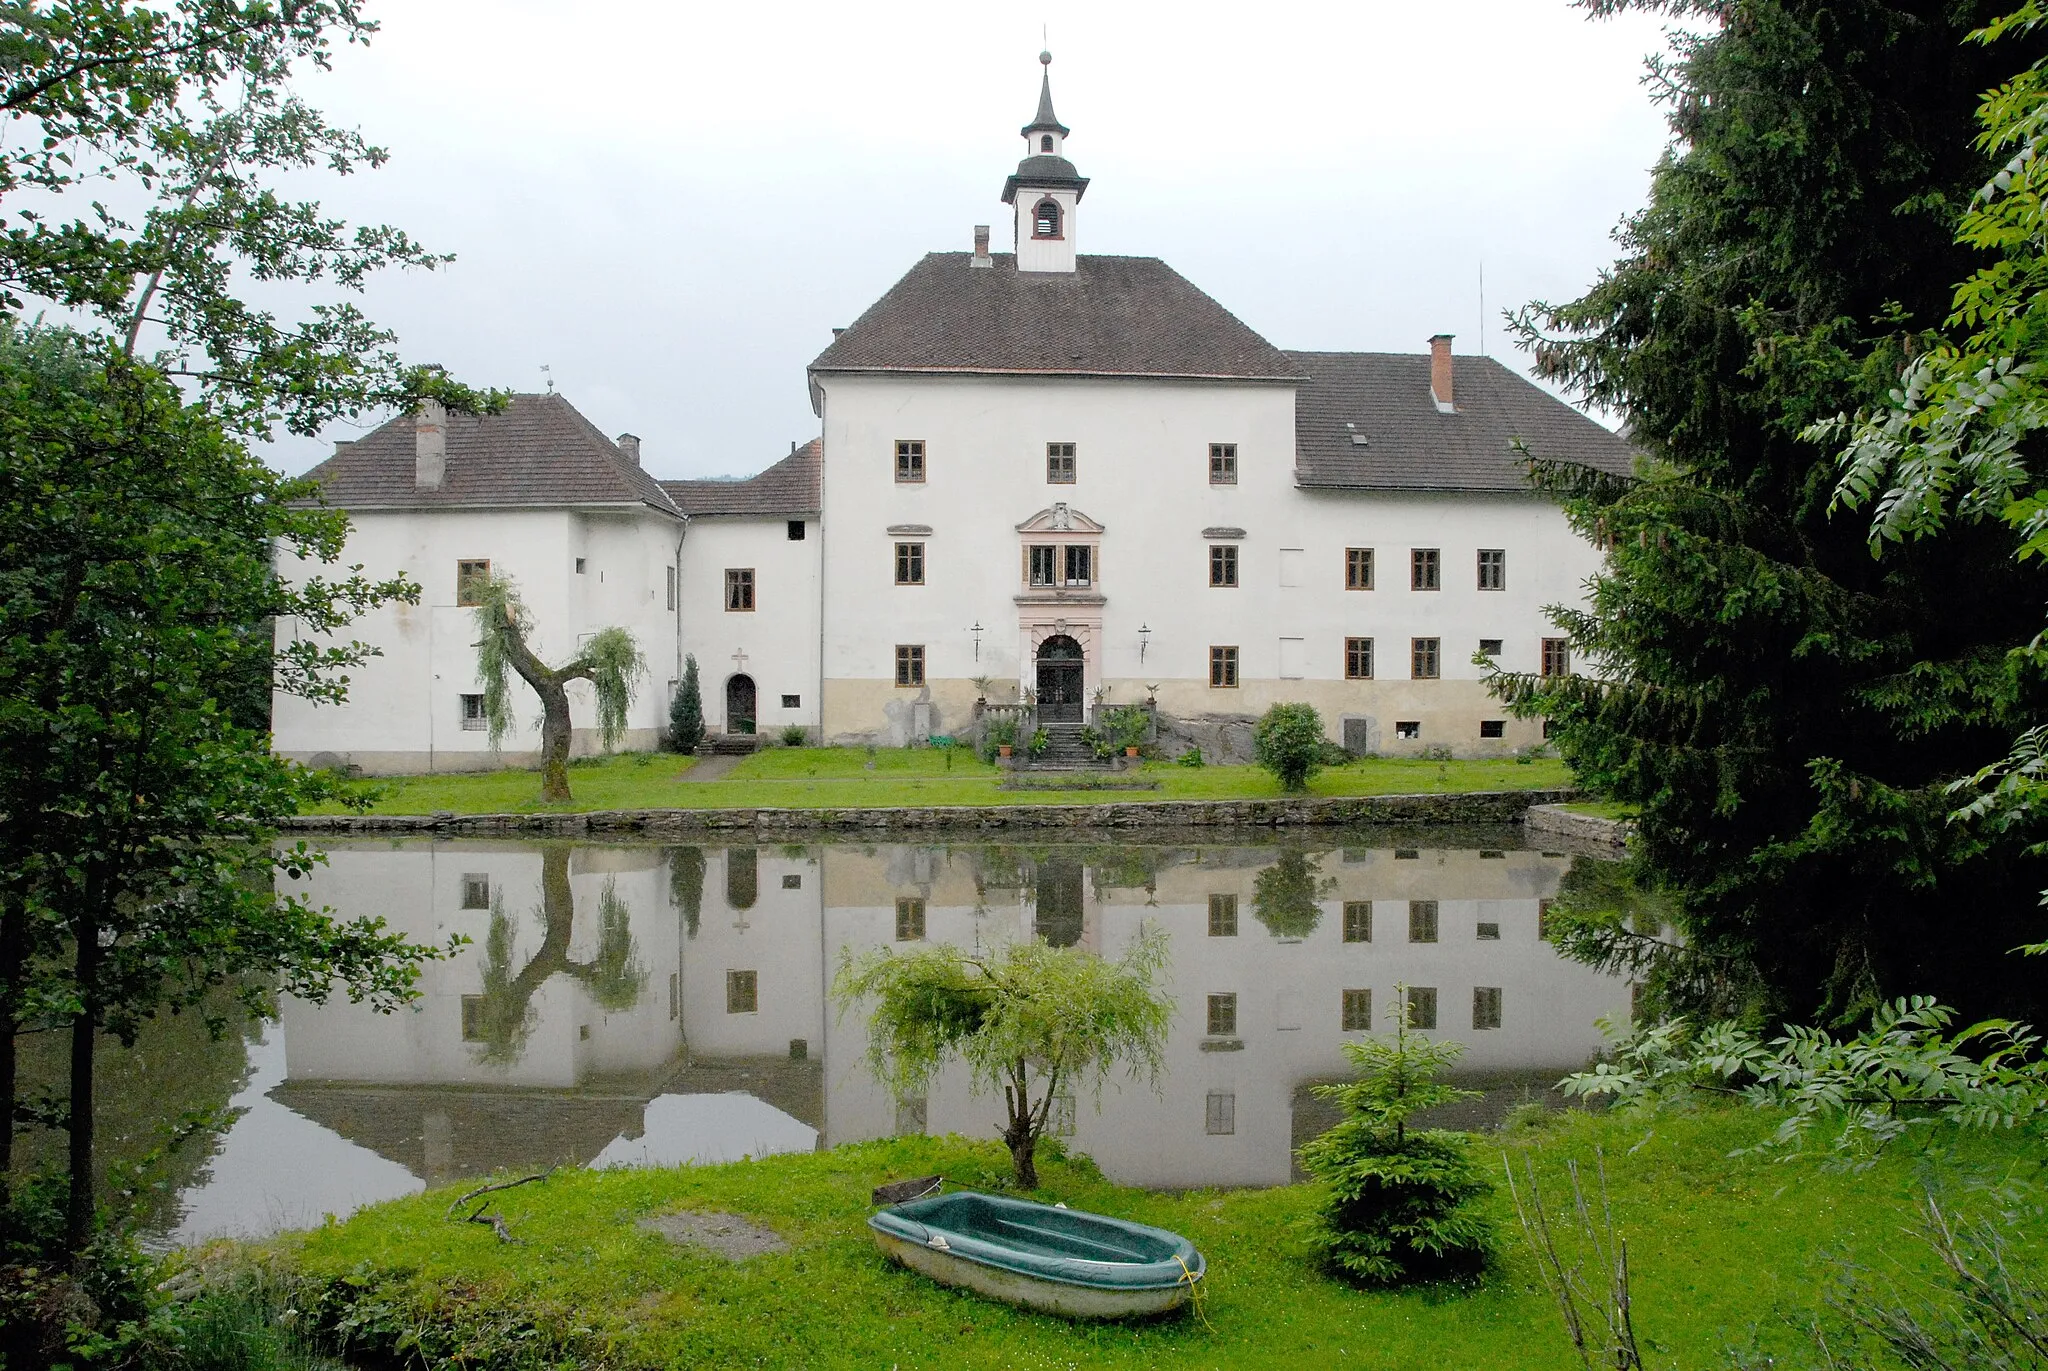 Photo showing: Northern view at castle Rothenturn, municipality Spittal an der Drau, Carinthia, Austria, European Union